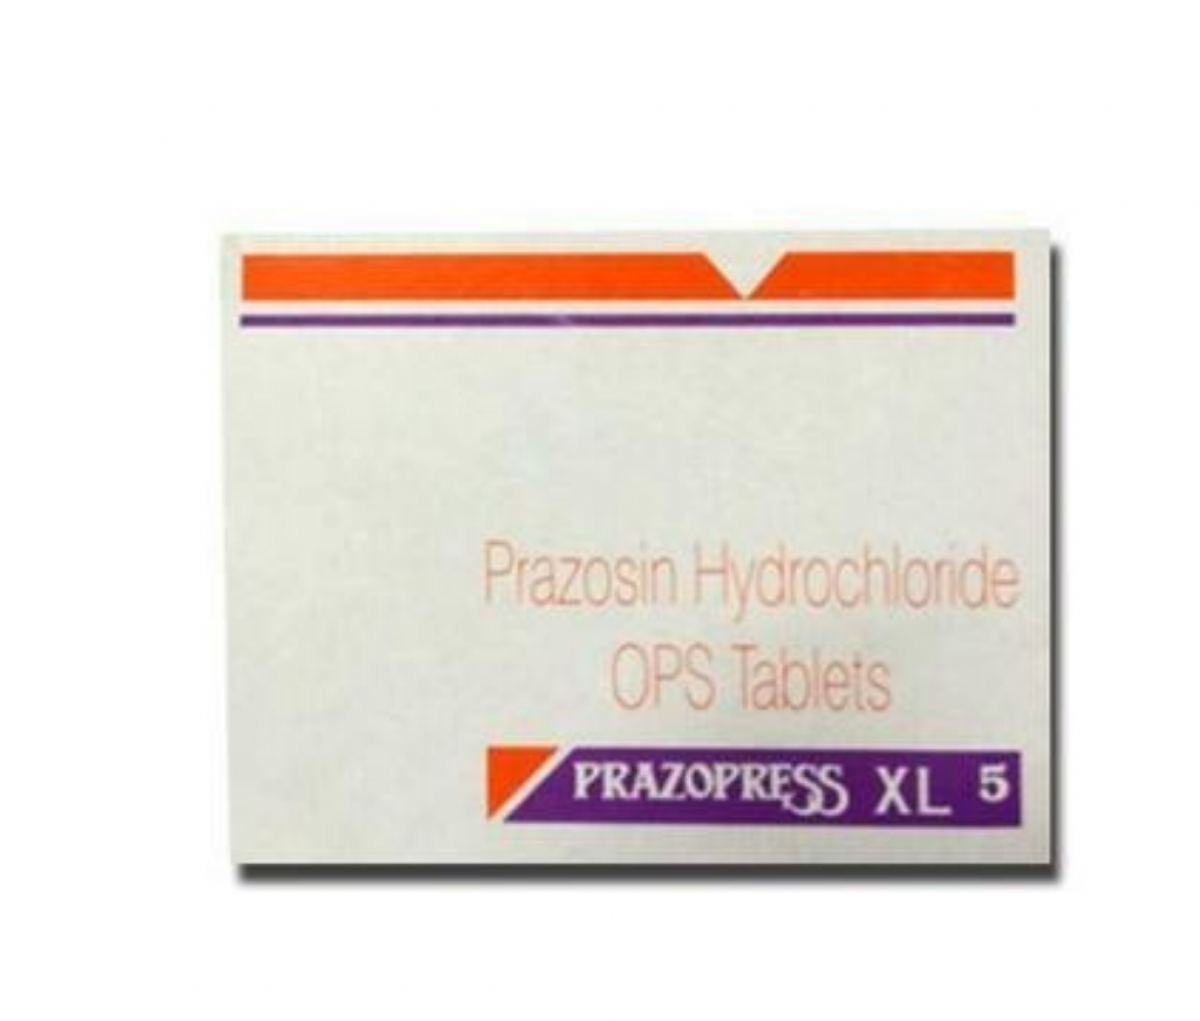 Prazopress XL 5mg